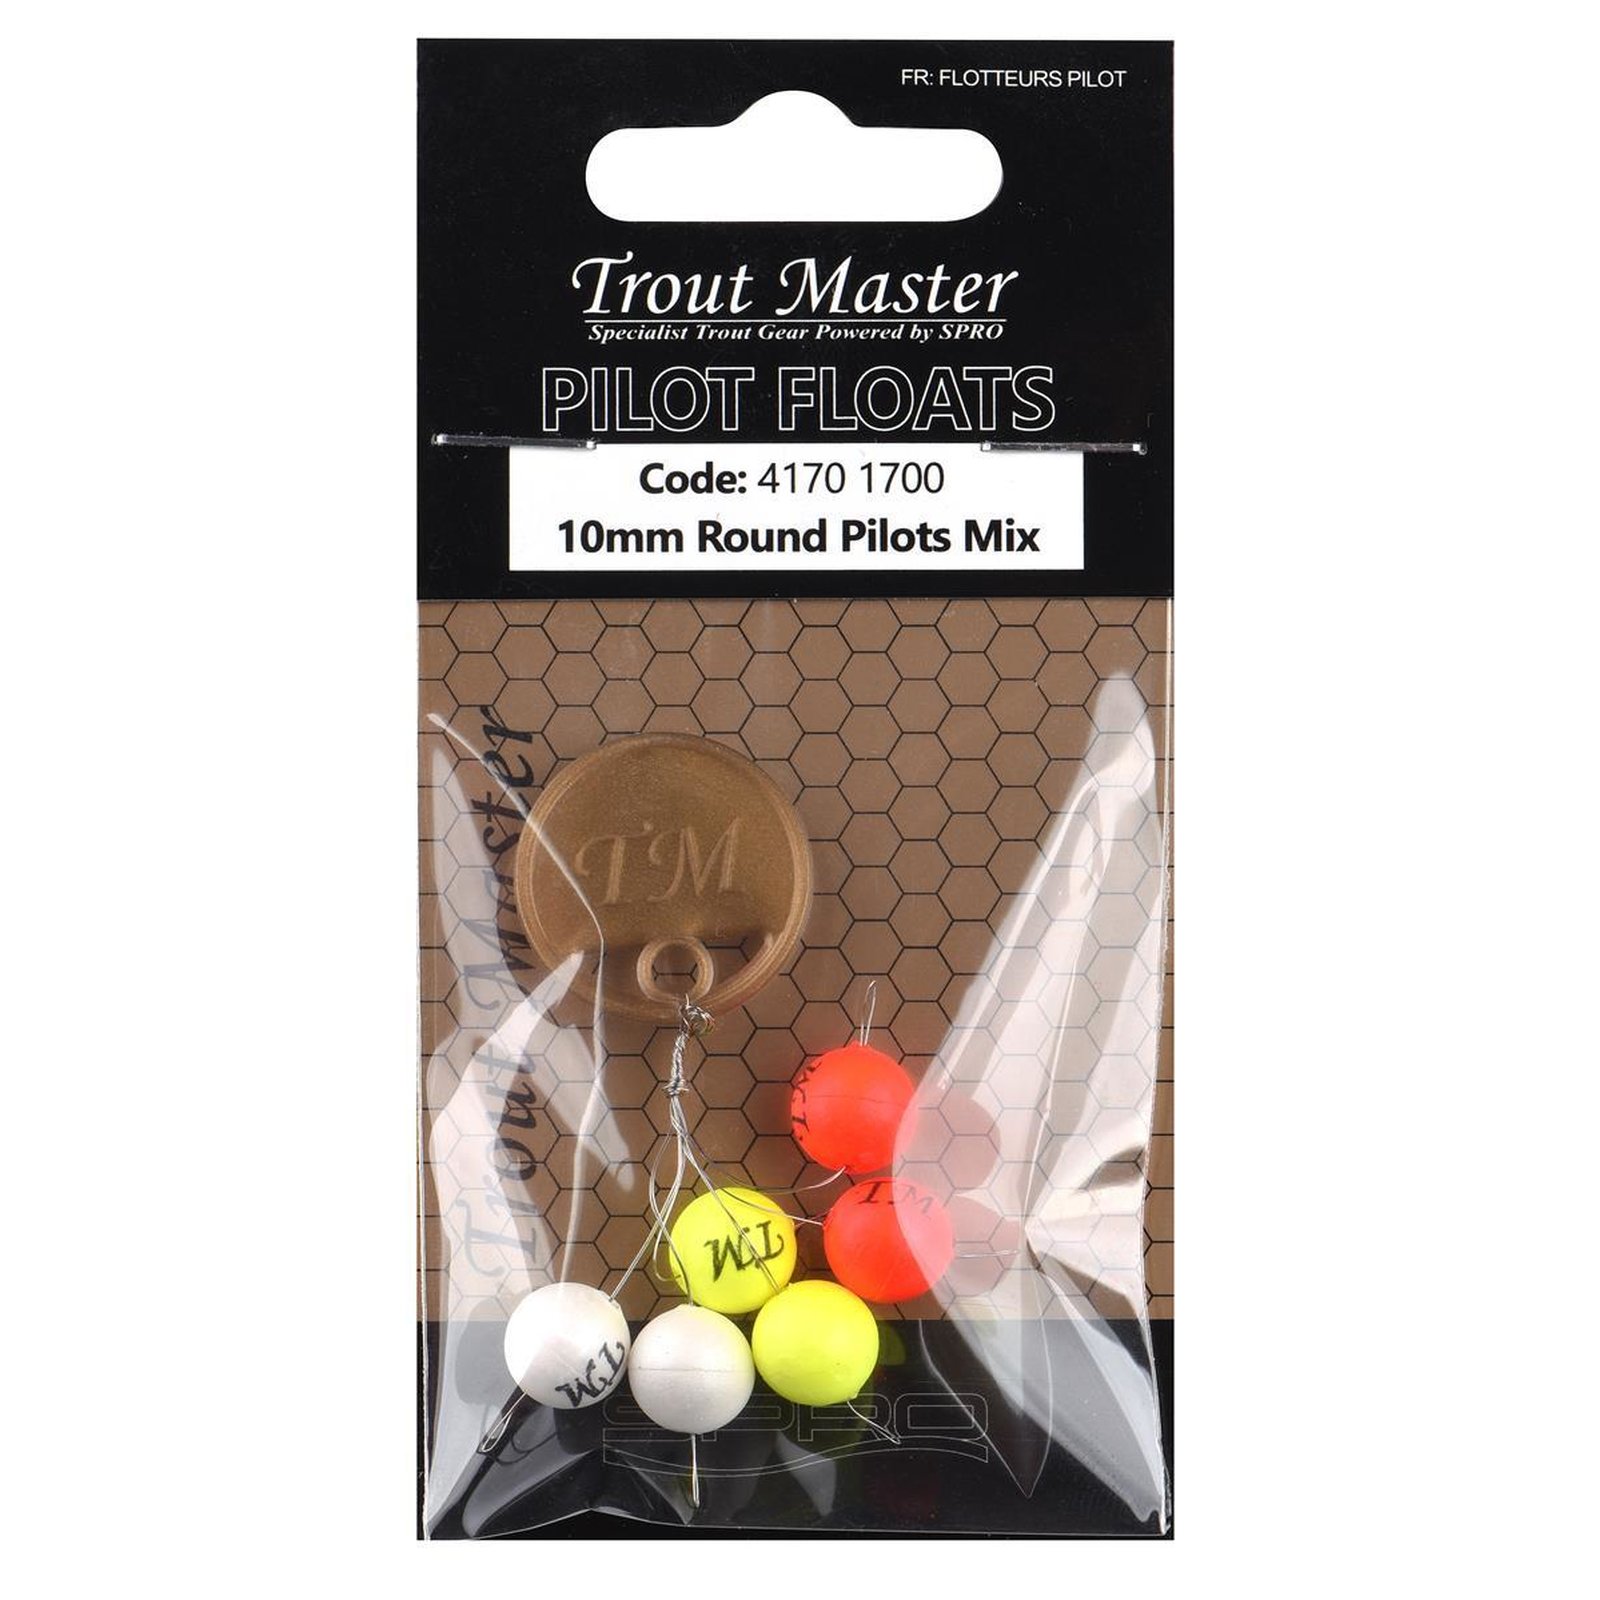 Trout Master Round Pilots Mix 10mm